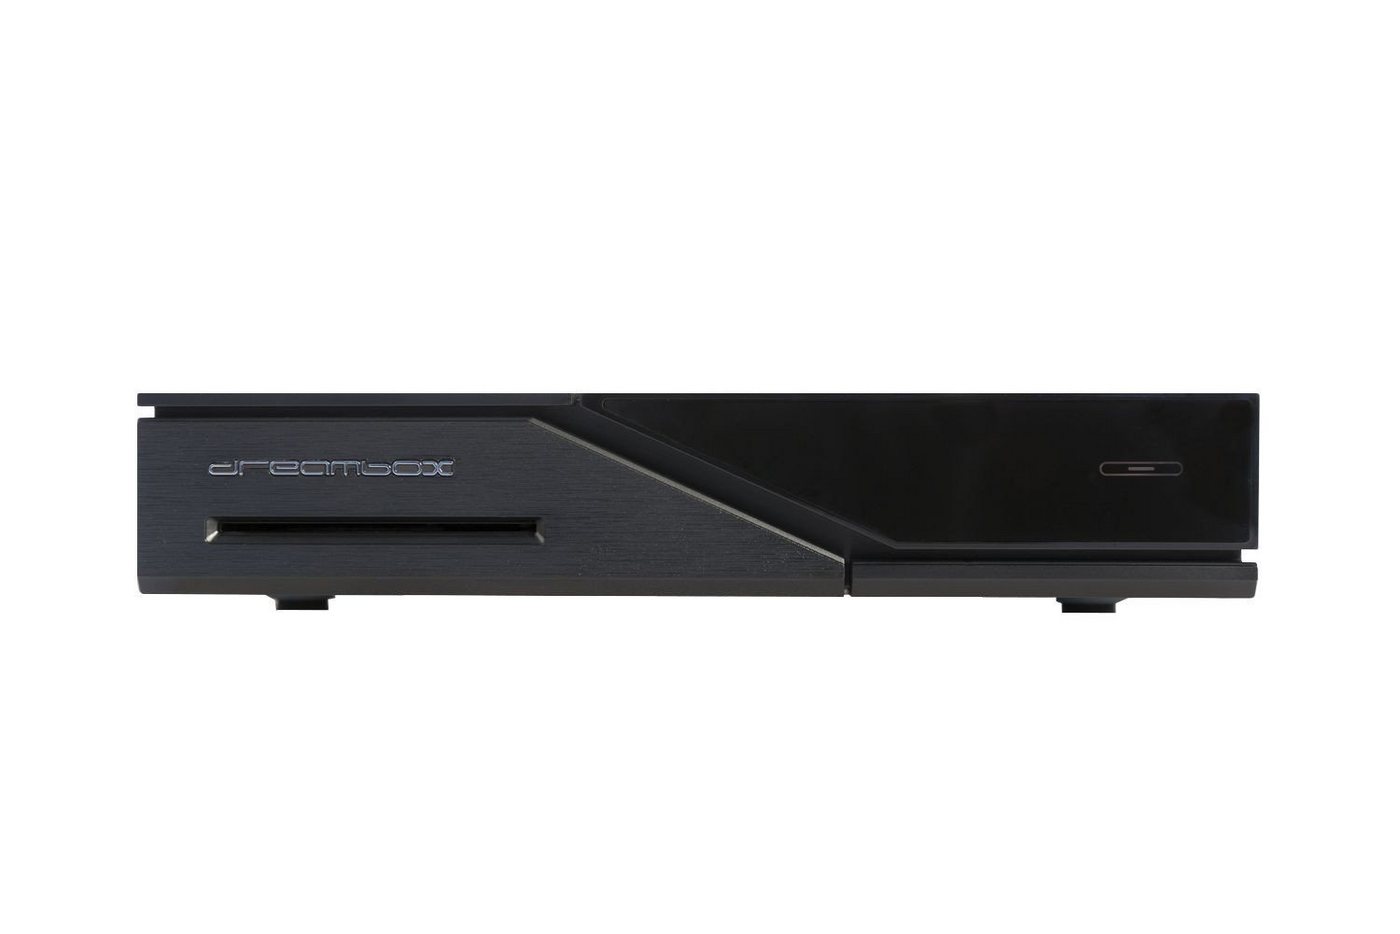 Dreambox Dreambox DM520 1x DVB-S2 Tuner Linux Receiver (PVR ready, Full HD Satellitenreceiver von Dreambox